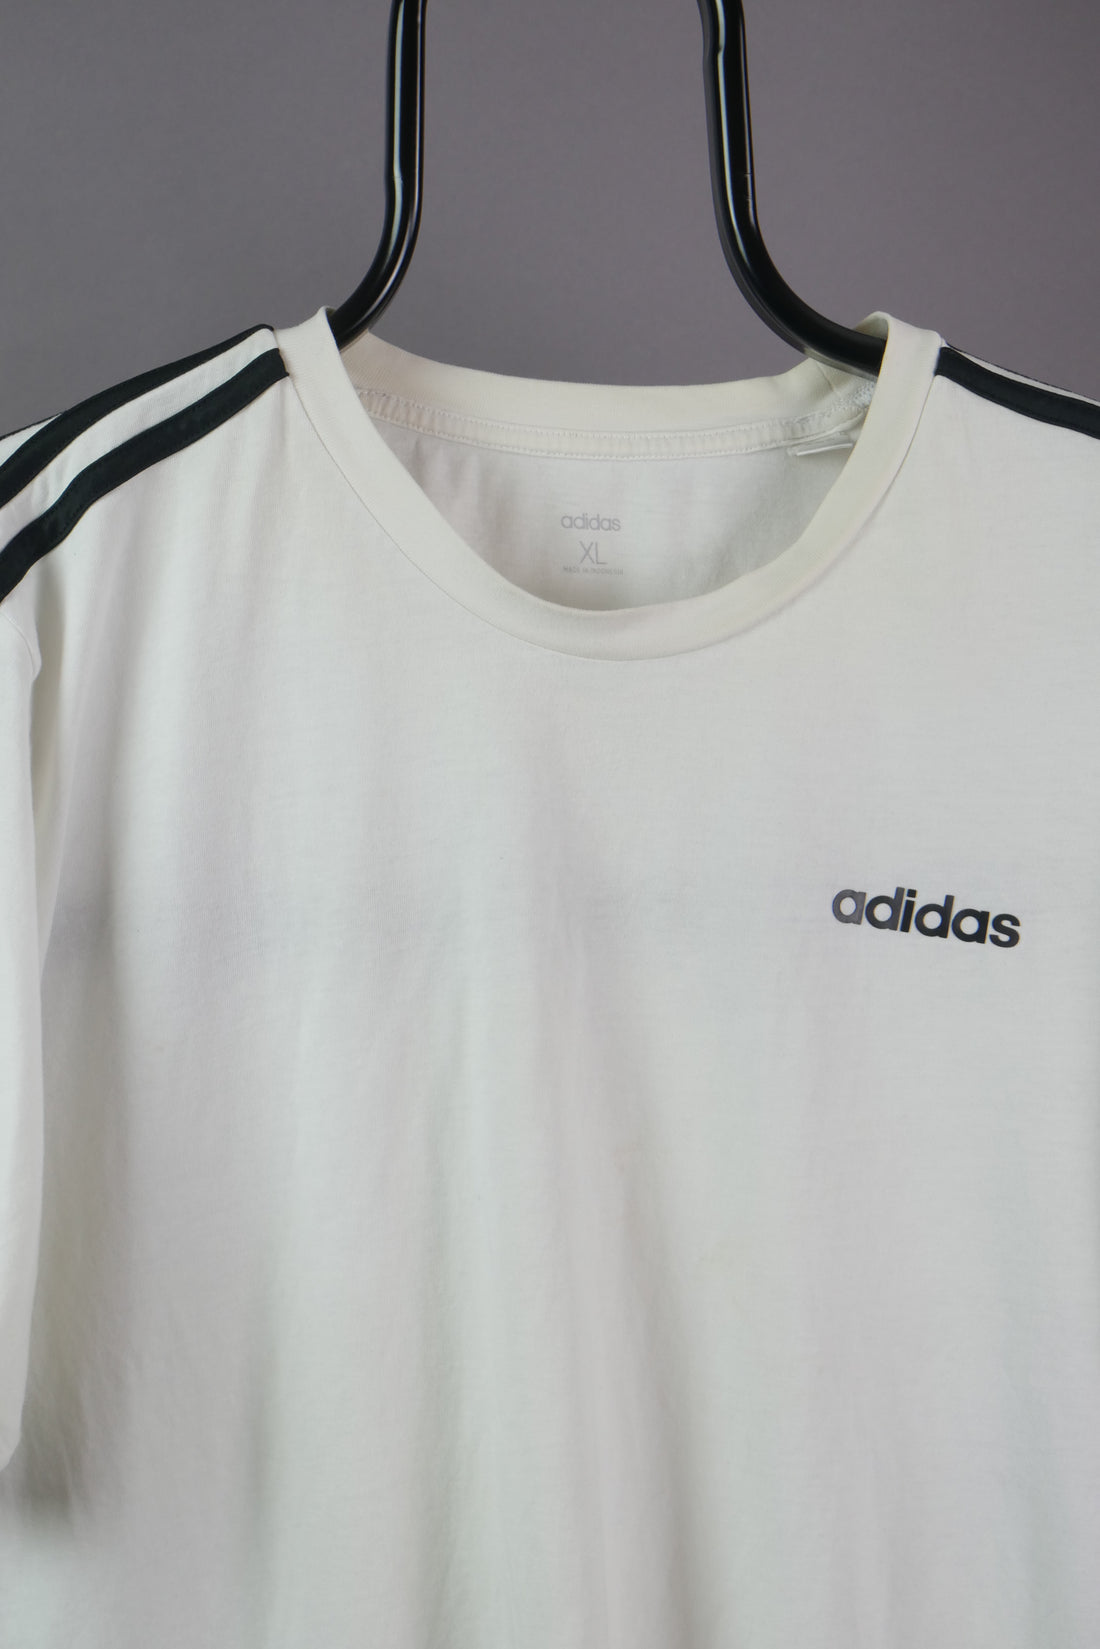 The Adidas Graphic Logo T-Shirt (XL)